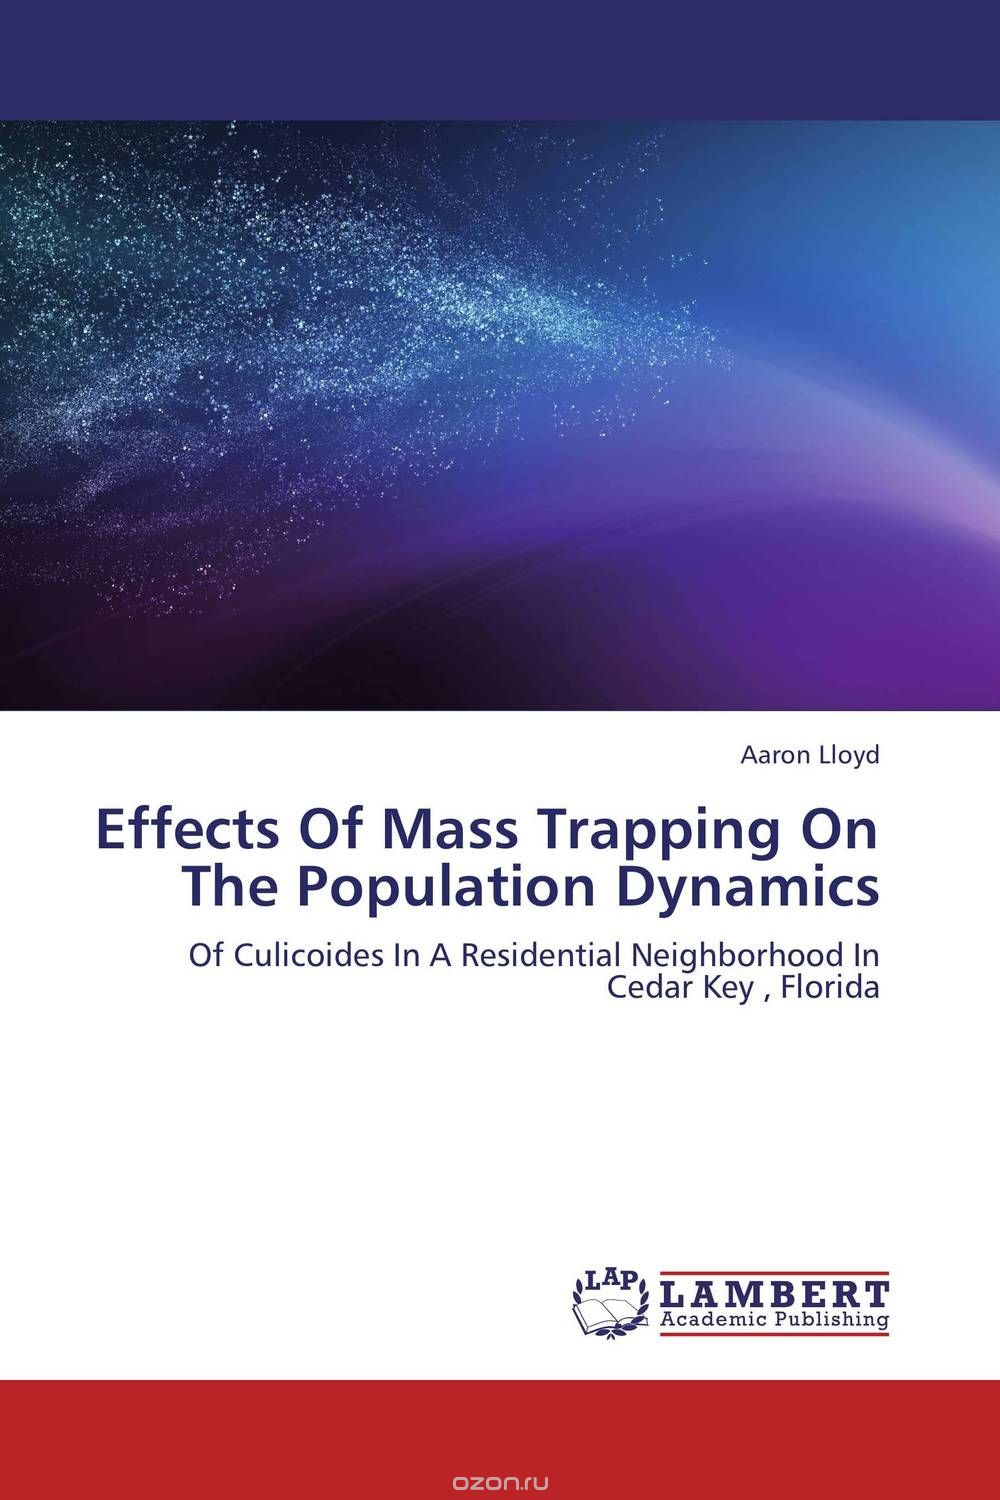 Скачать книгу "Effects Of Mass Trapping On The Population Dynamics"